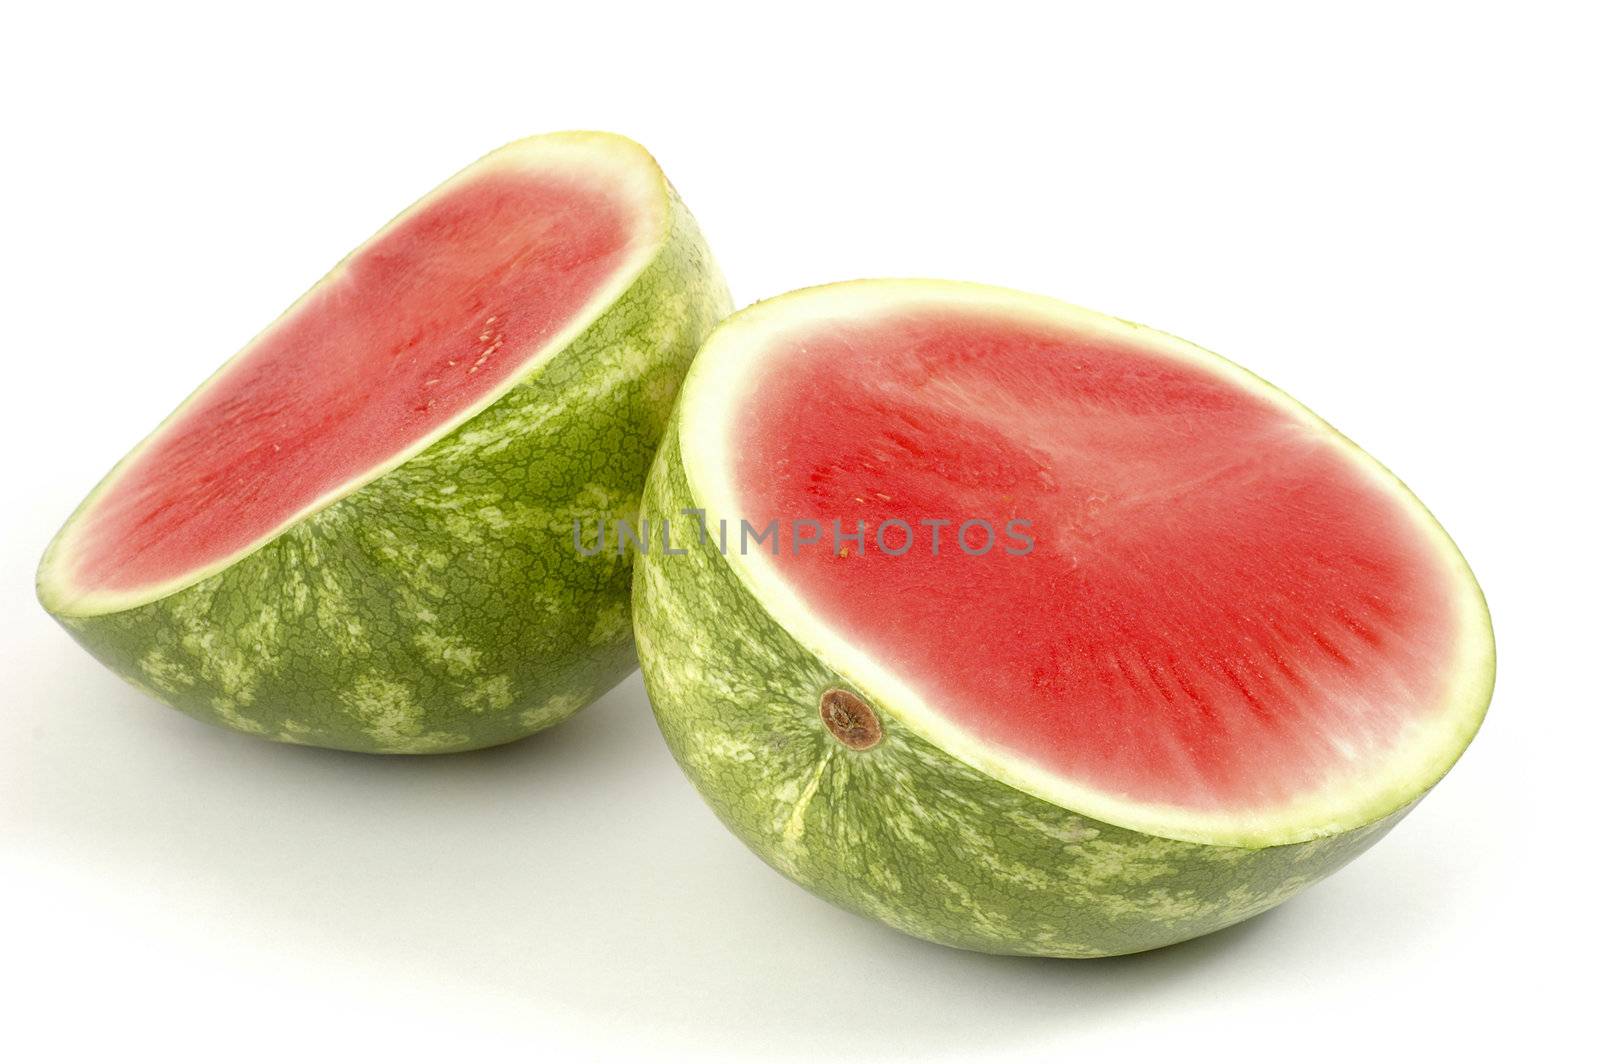 Juicy ripe red watermelon sliced in half.